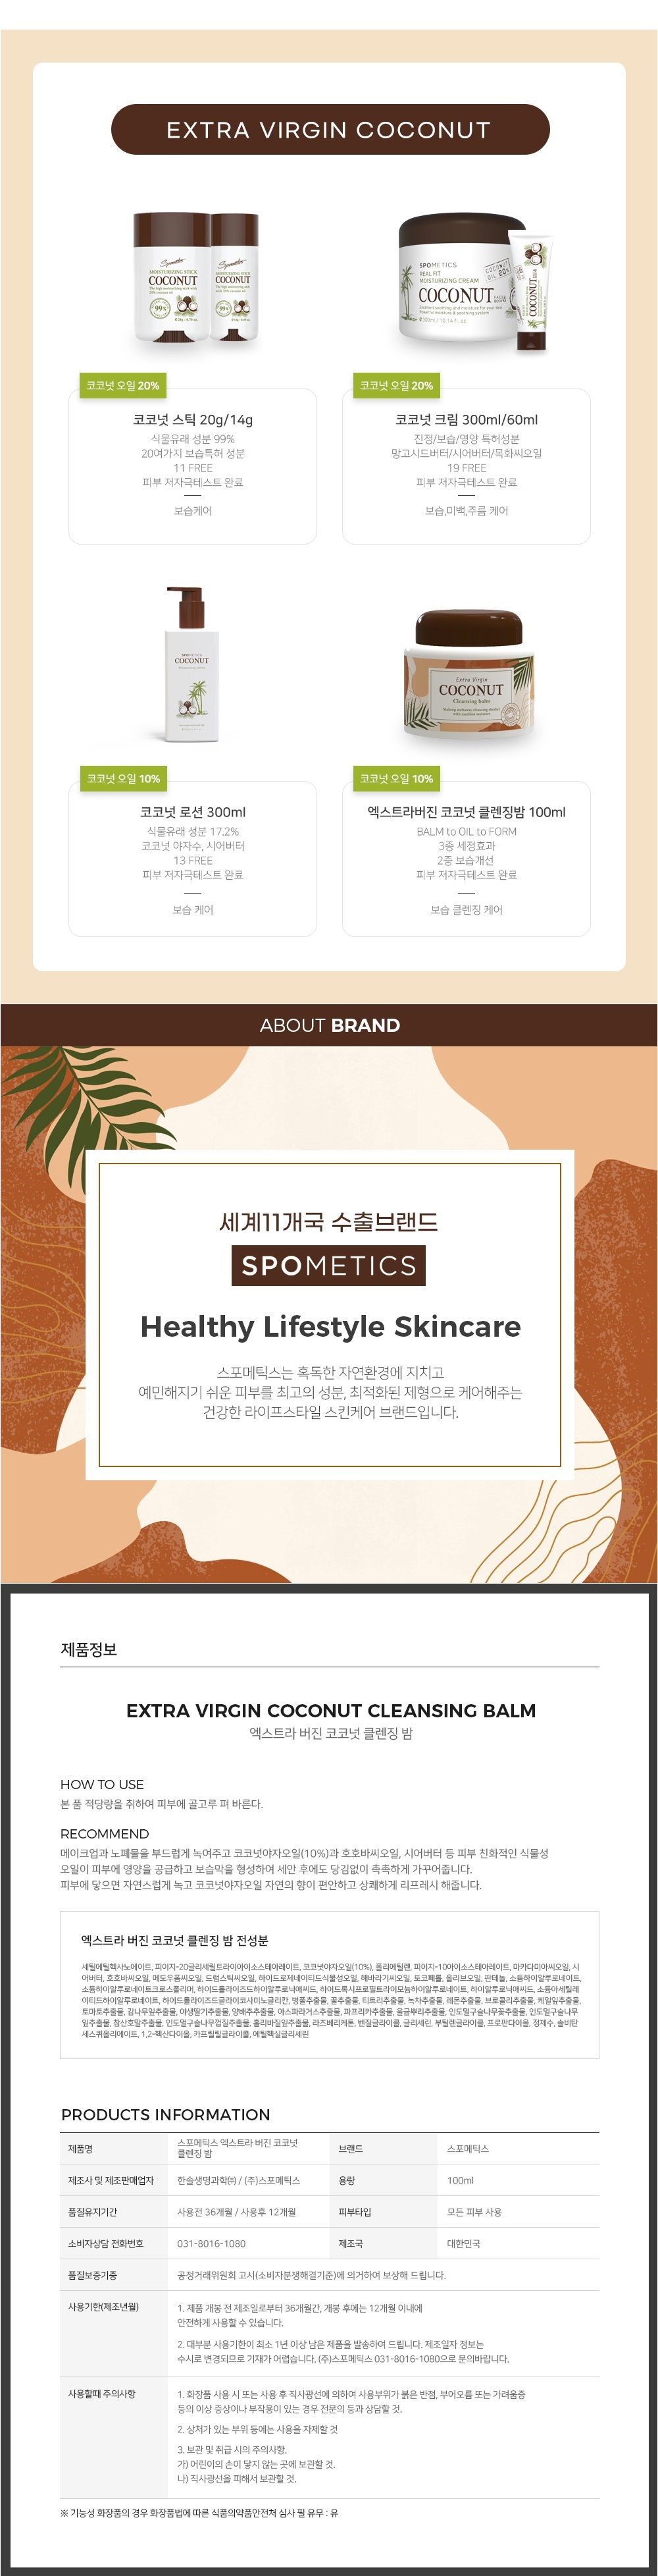 cosmetics product image-S3L9